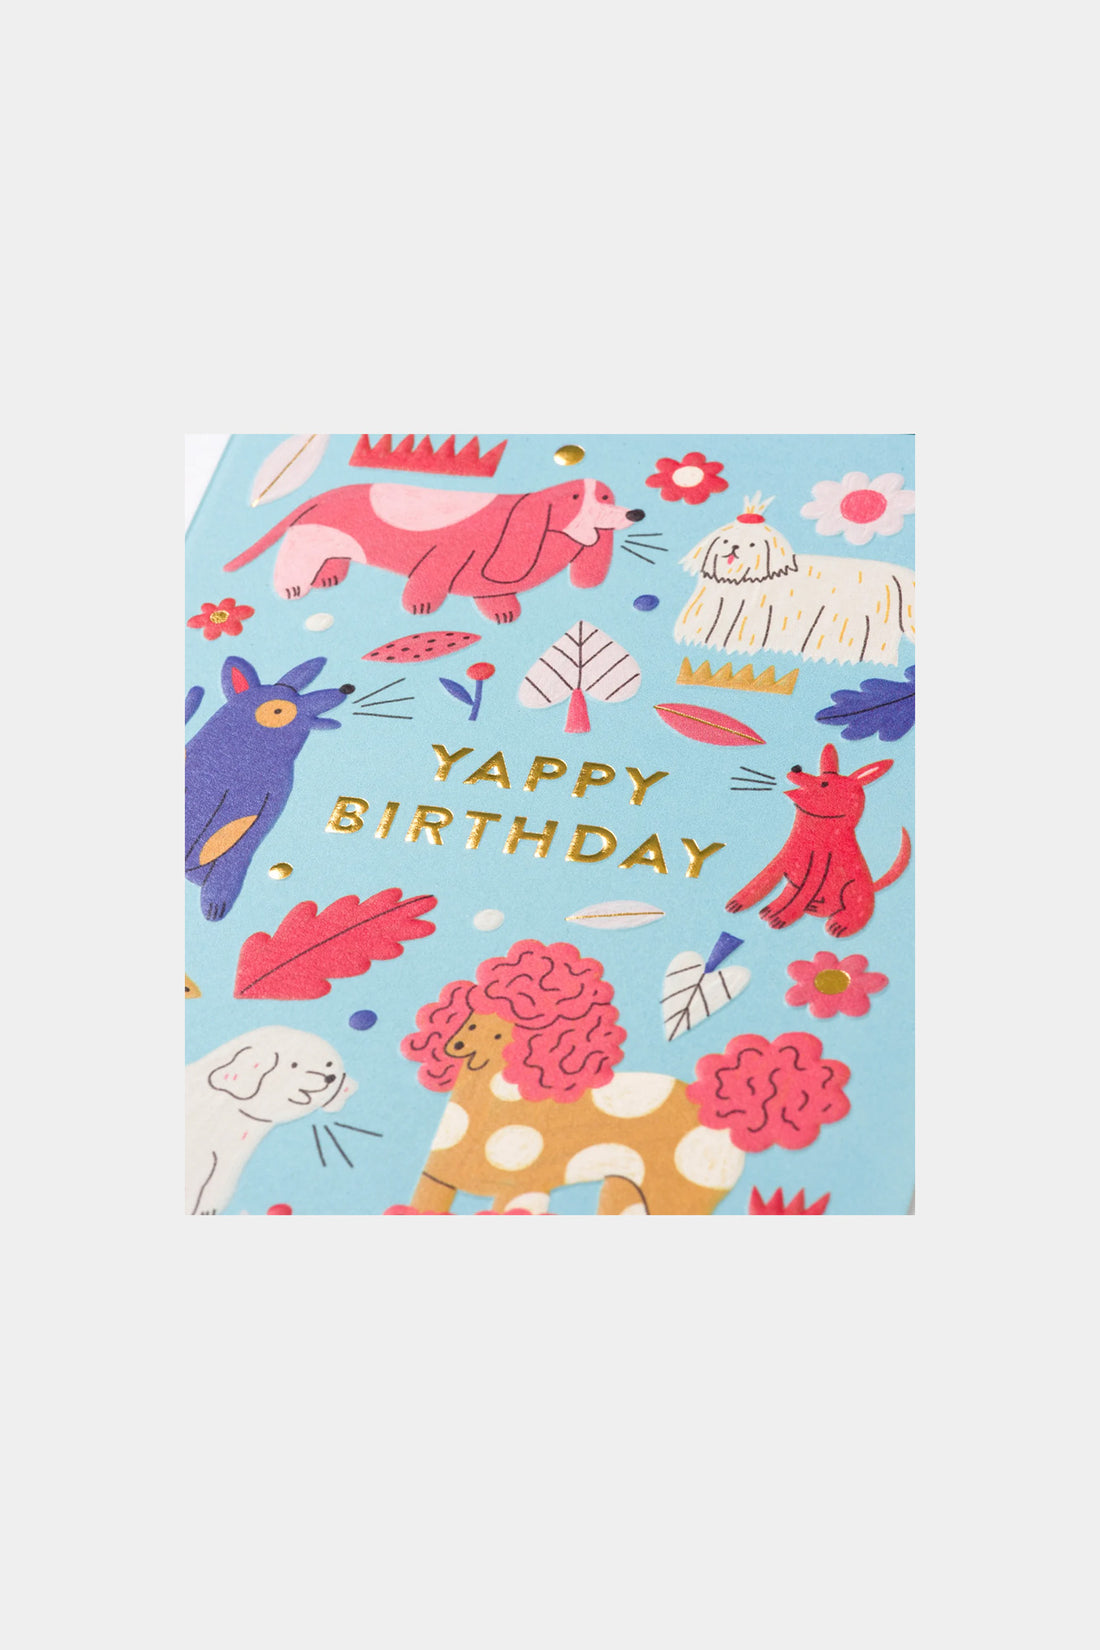 Yappy Birthday Greeting Card